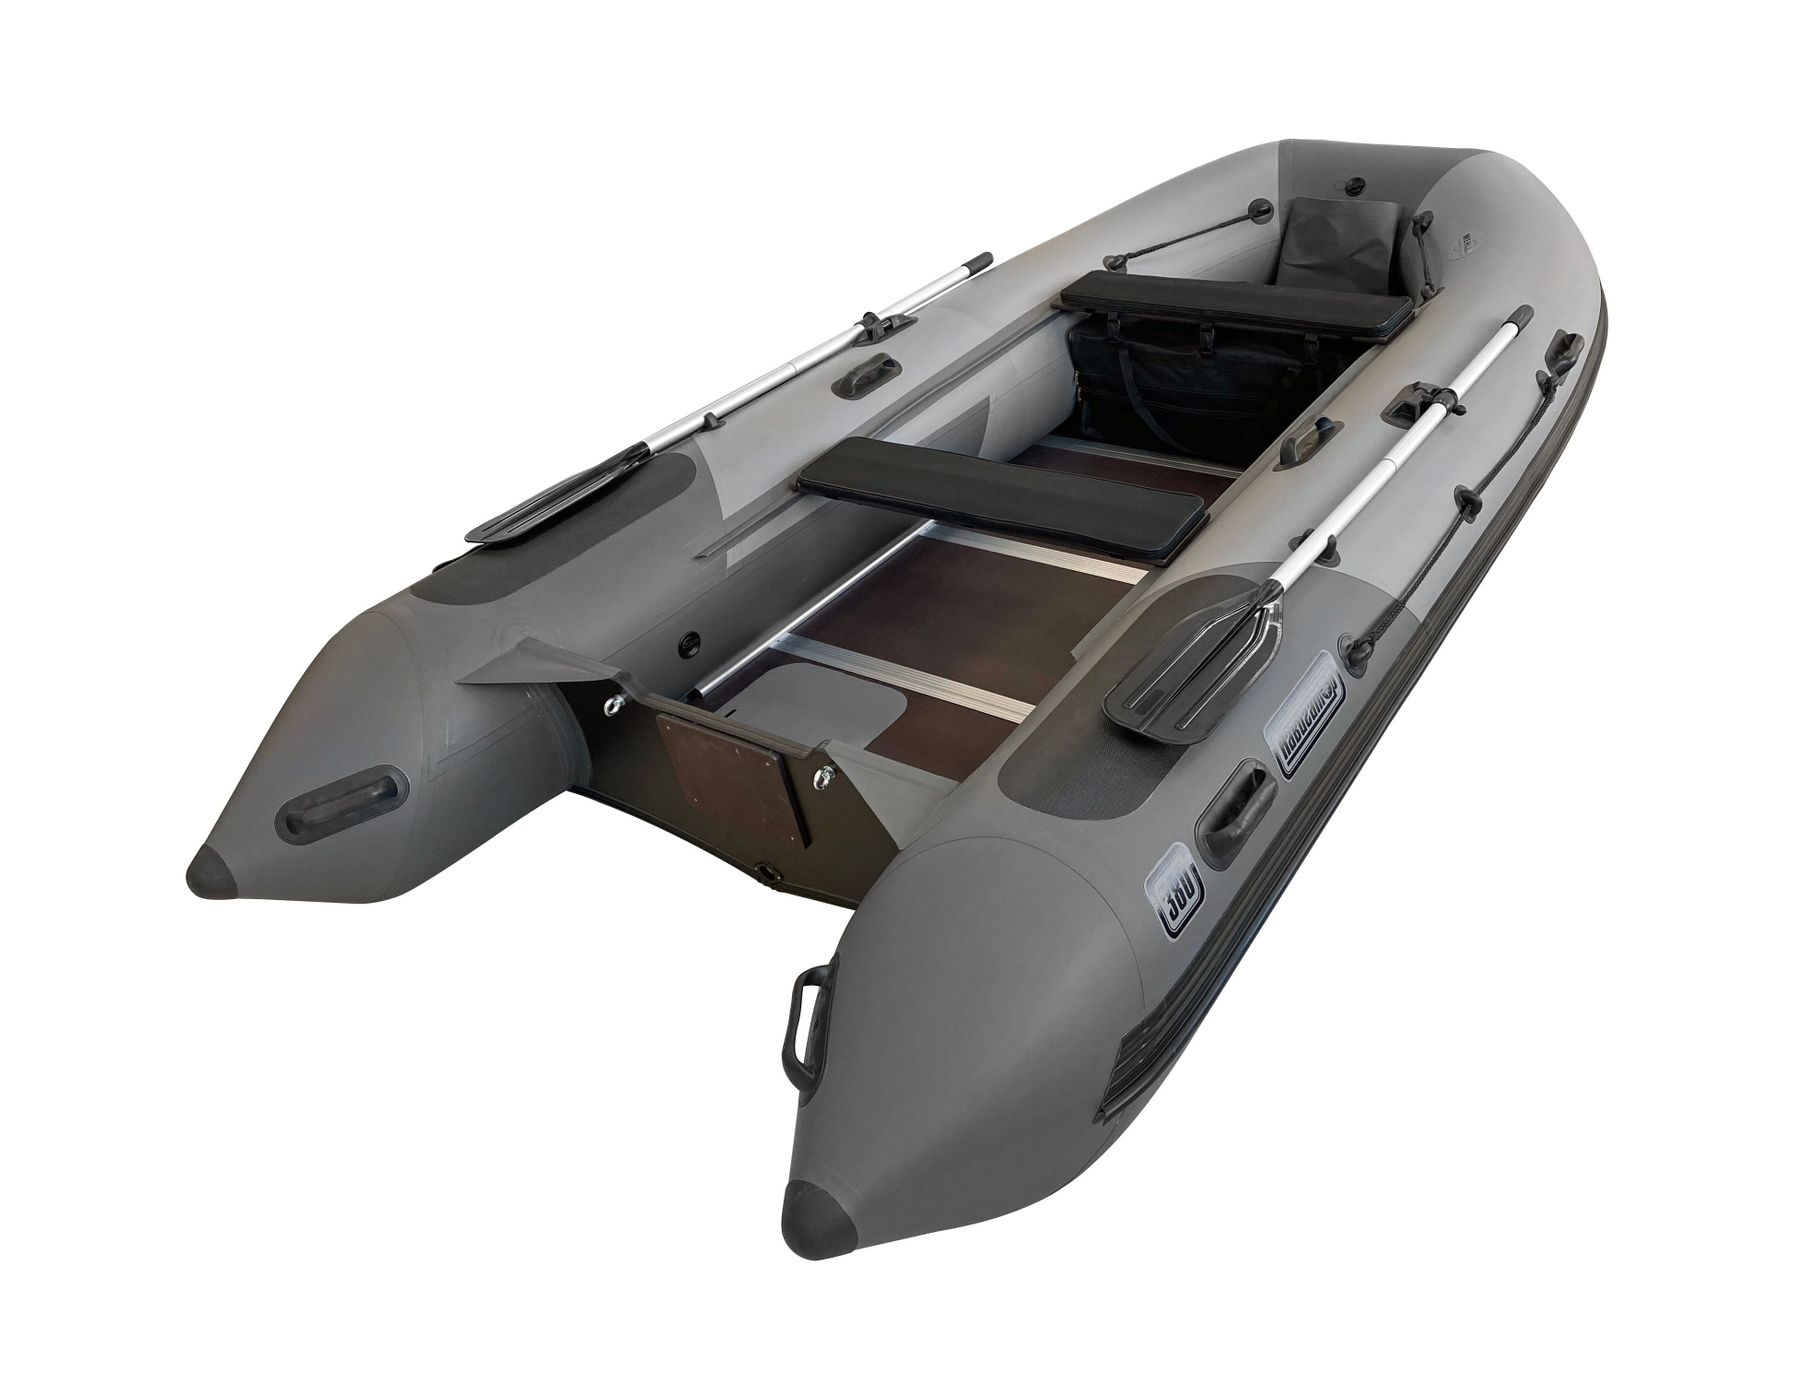 Надувная лодка ПВХ, Навигатор 380C, серый-графит, FORZA FM-N380CGGF, цвет серый/графит